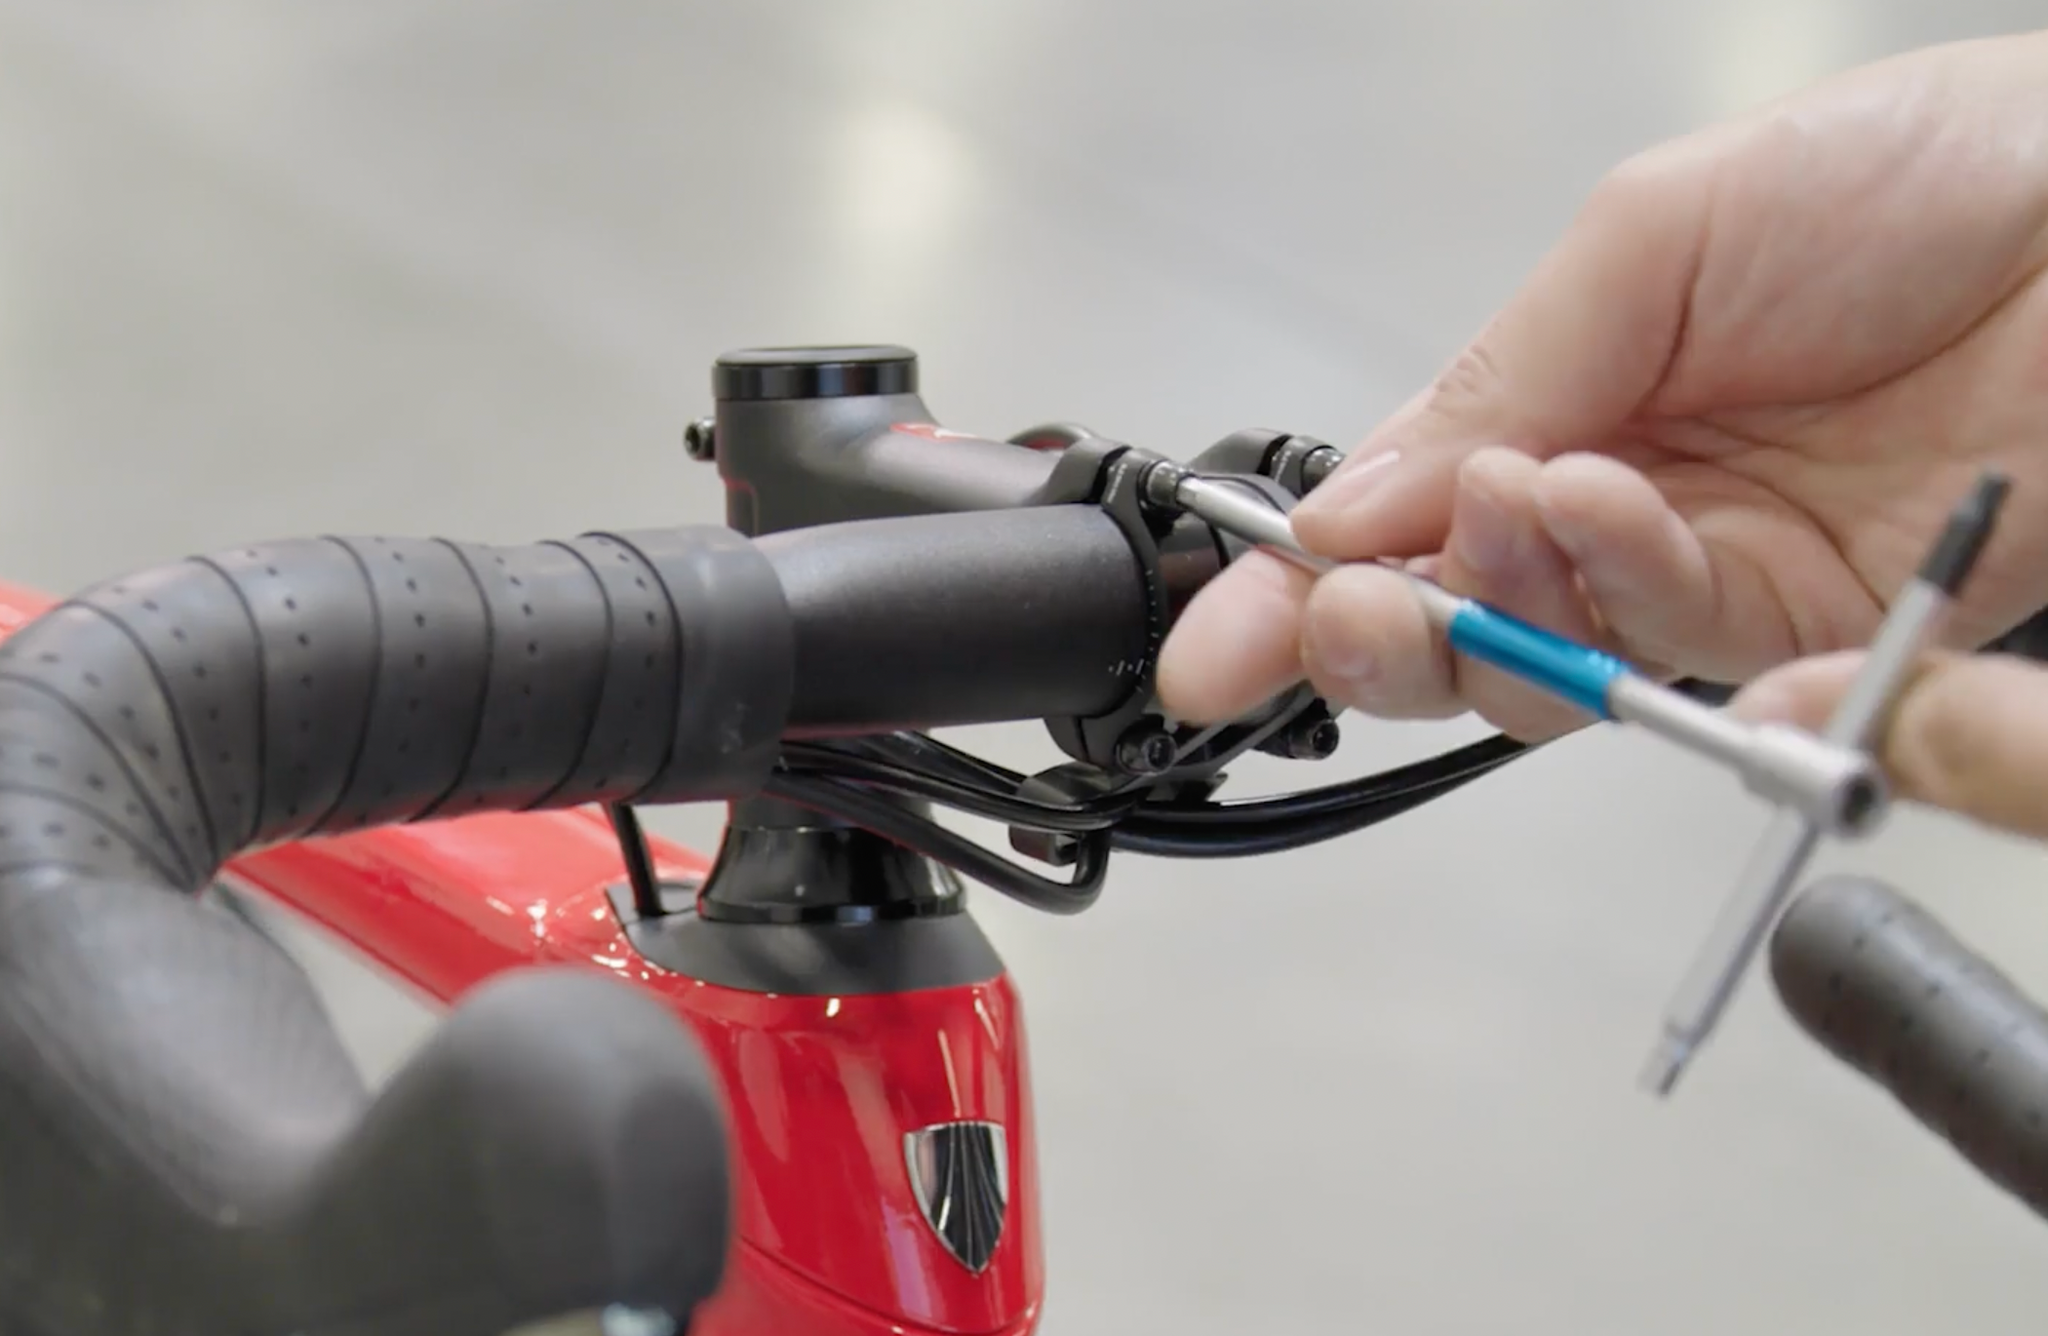 How to remove and install bike handlebars